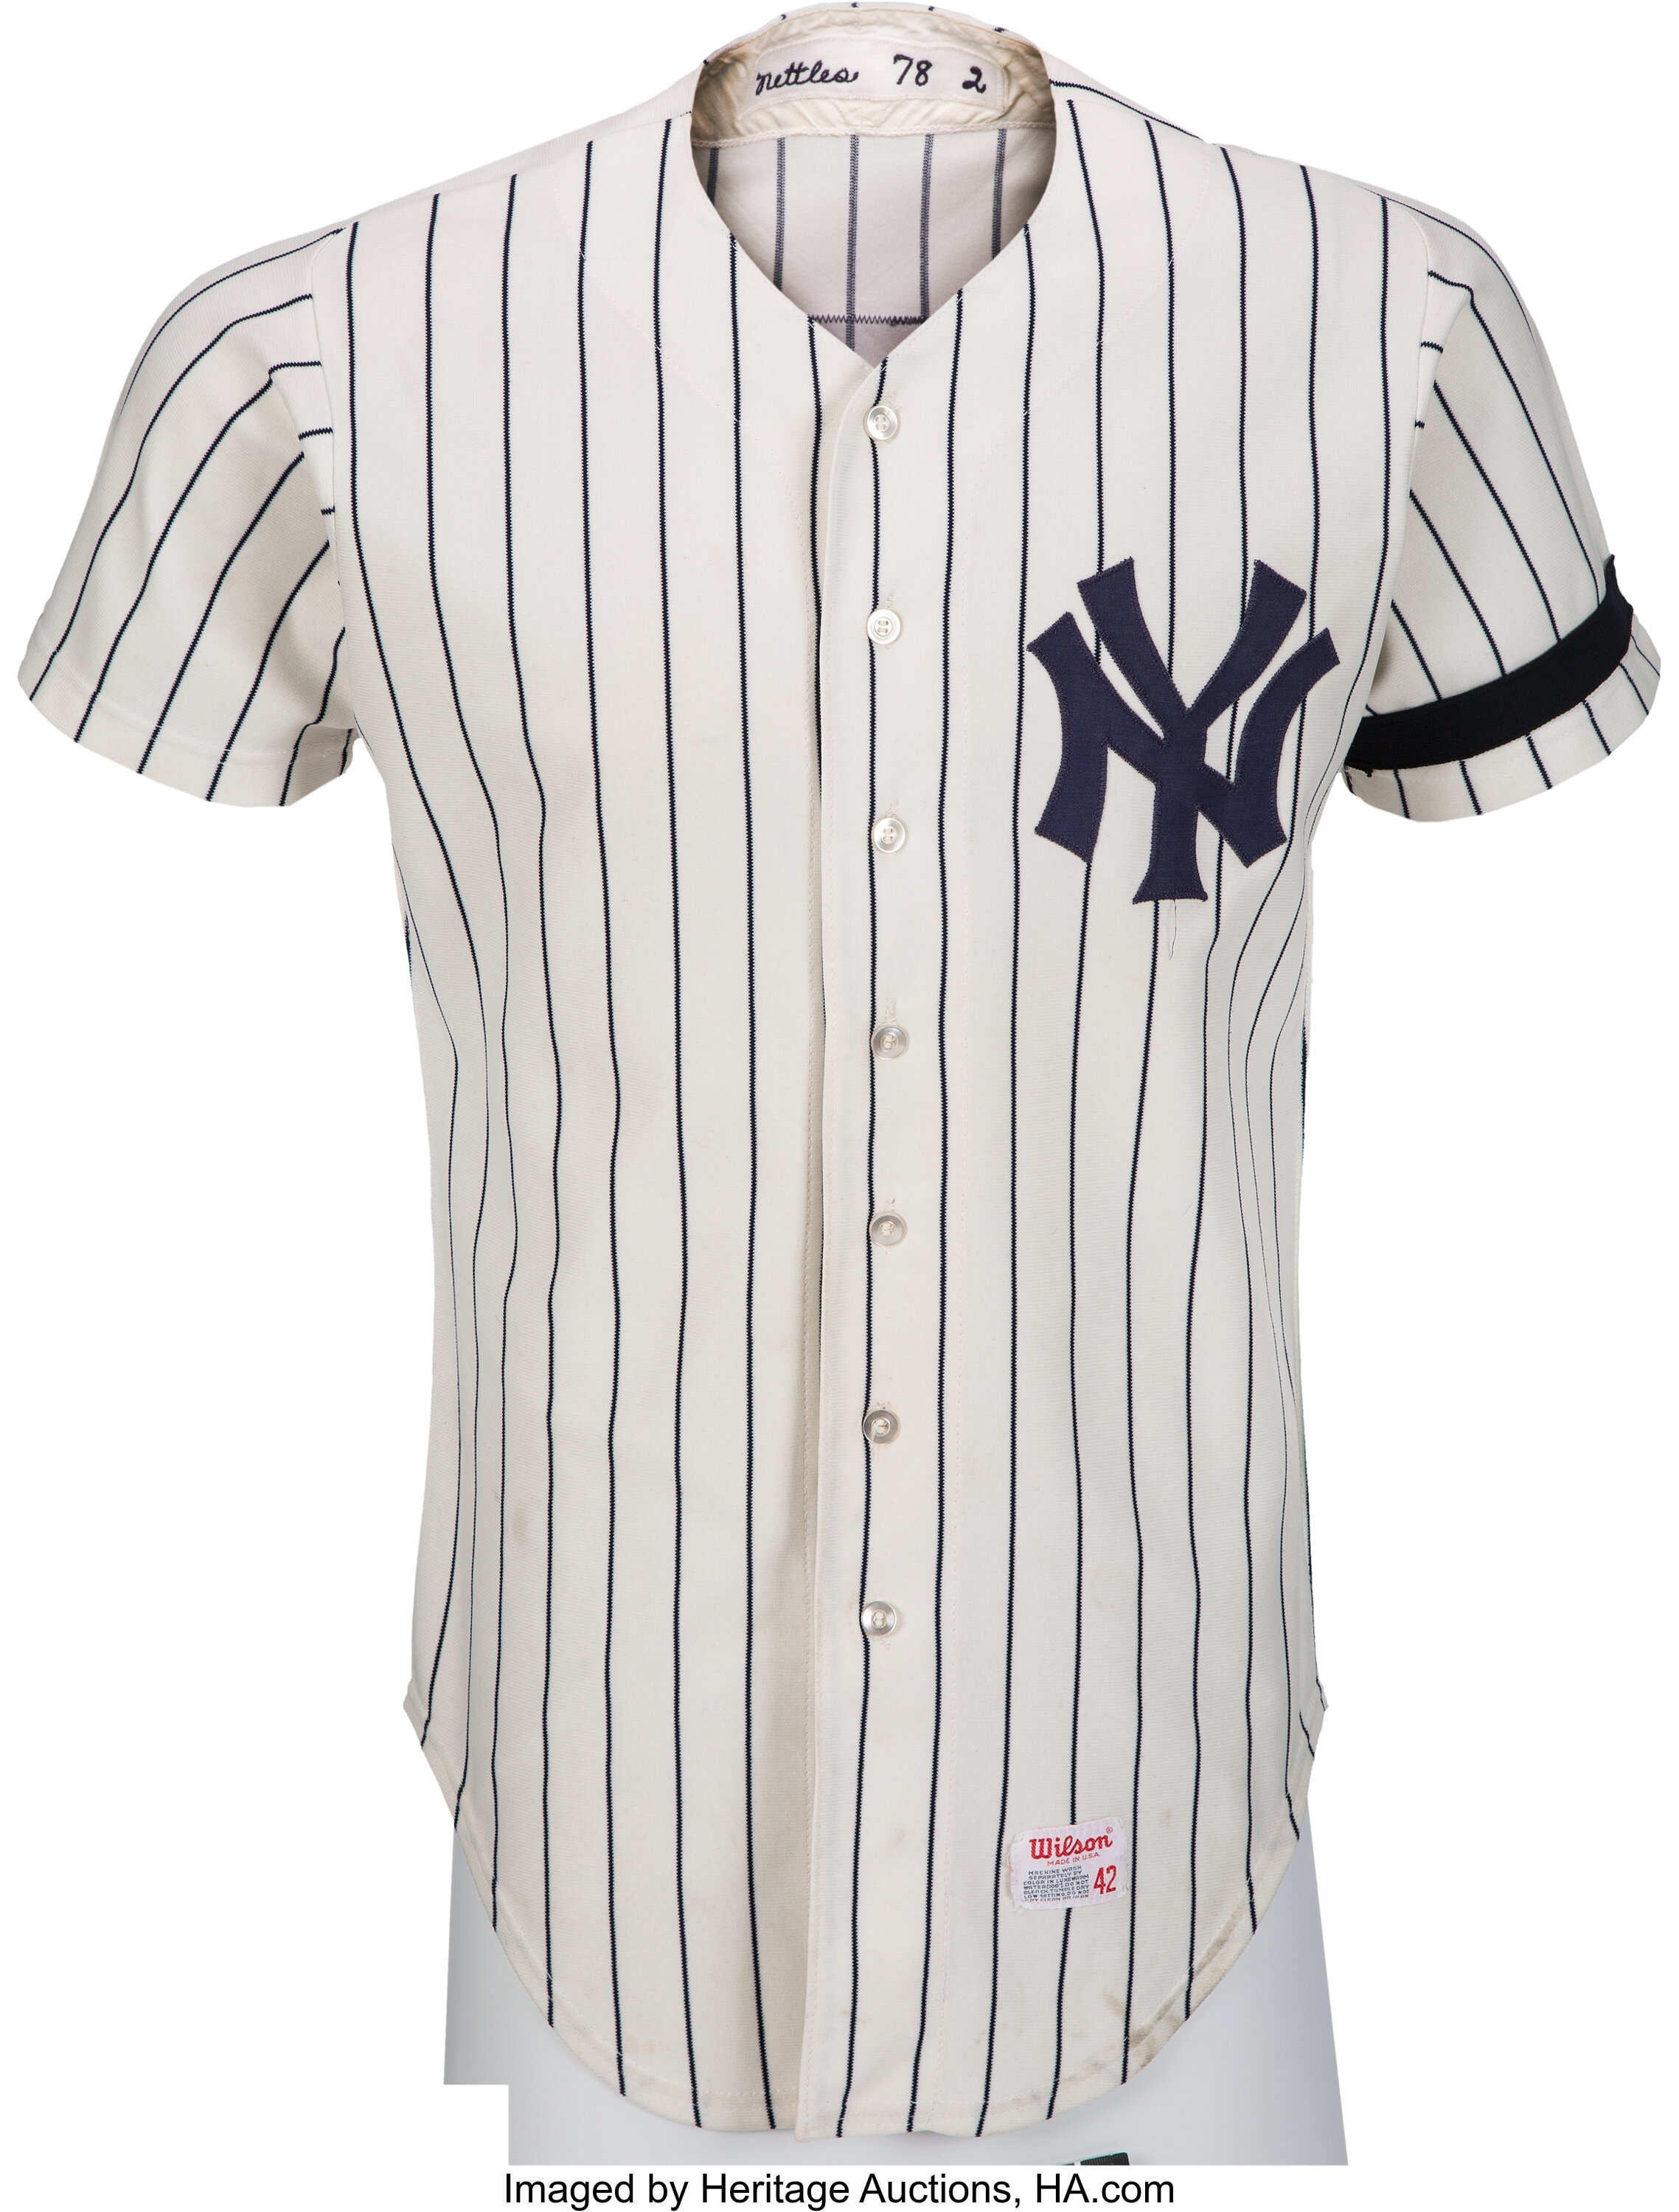 1978-79 Graig Nettles Game Worn New York Yankees Jersey with